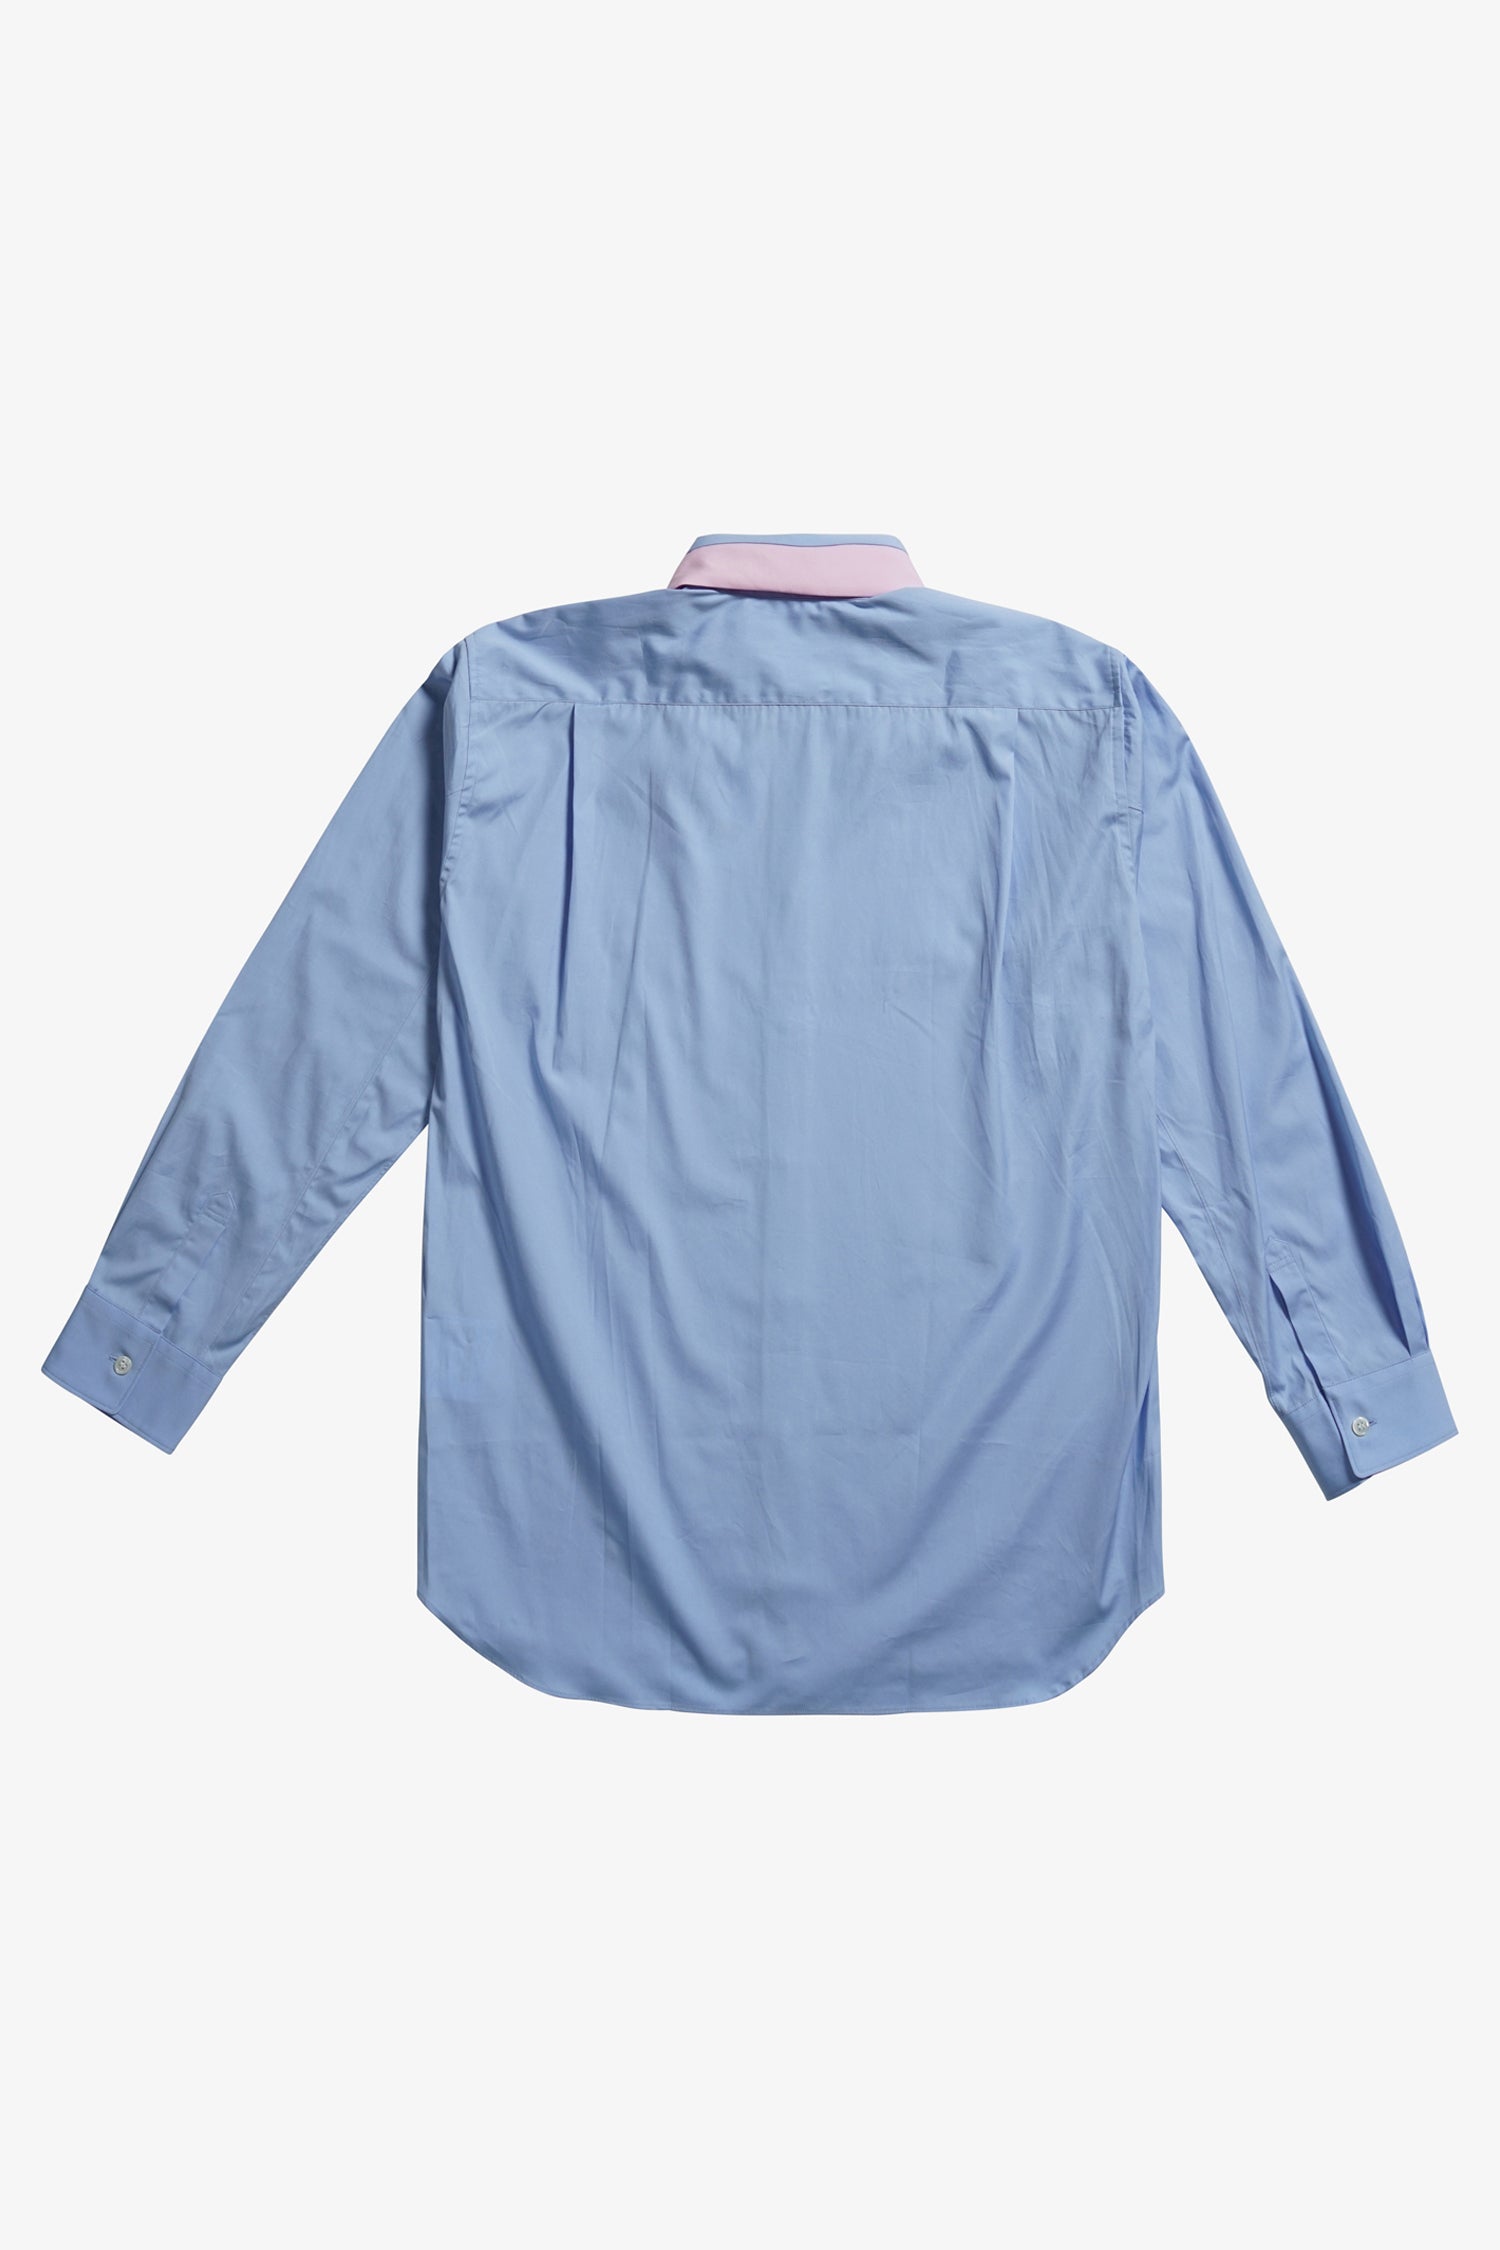 Selectshop FRAME - COMME DES GARÇONS SHIRT Long Collar Shirt Shirts Dubai